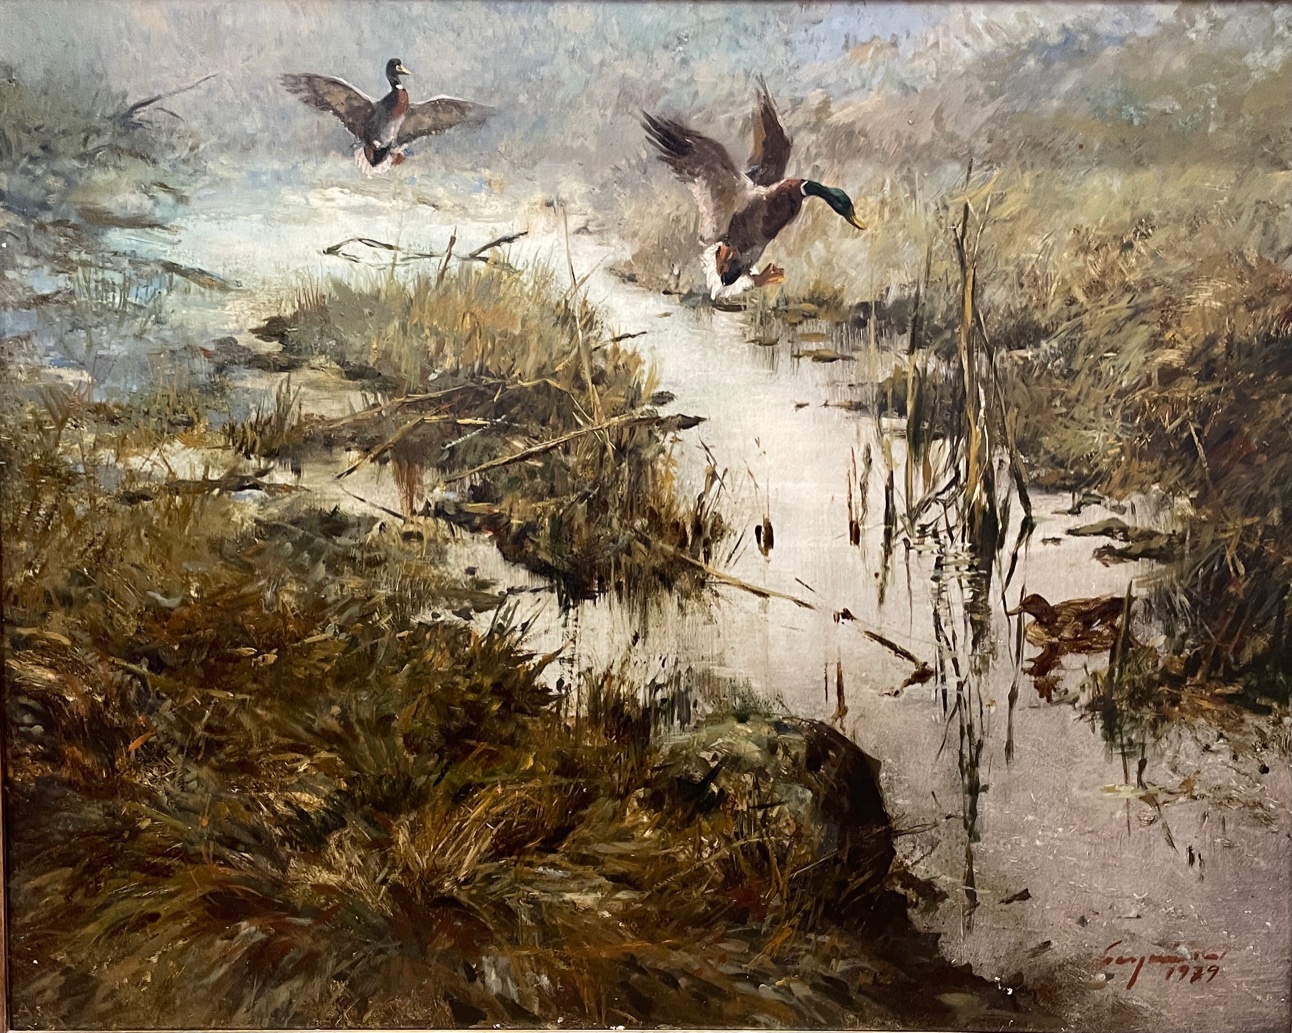 Csergezán, Pál: Wild ducks landing on water